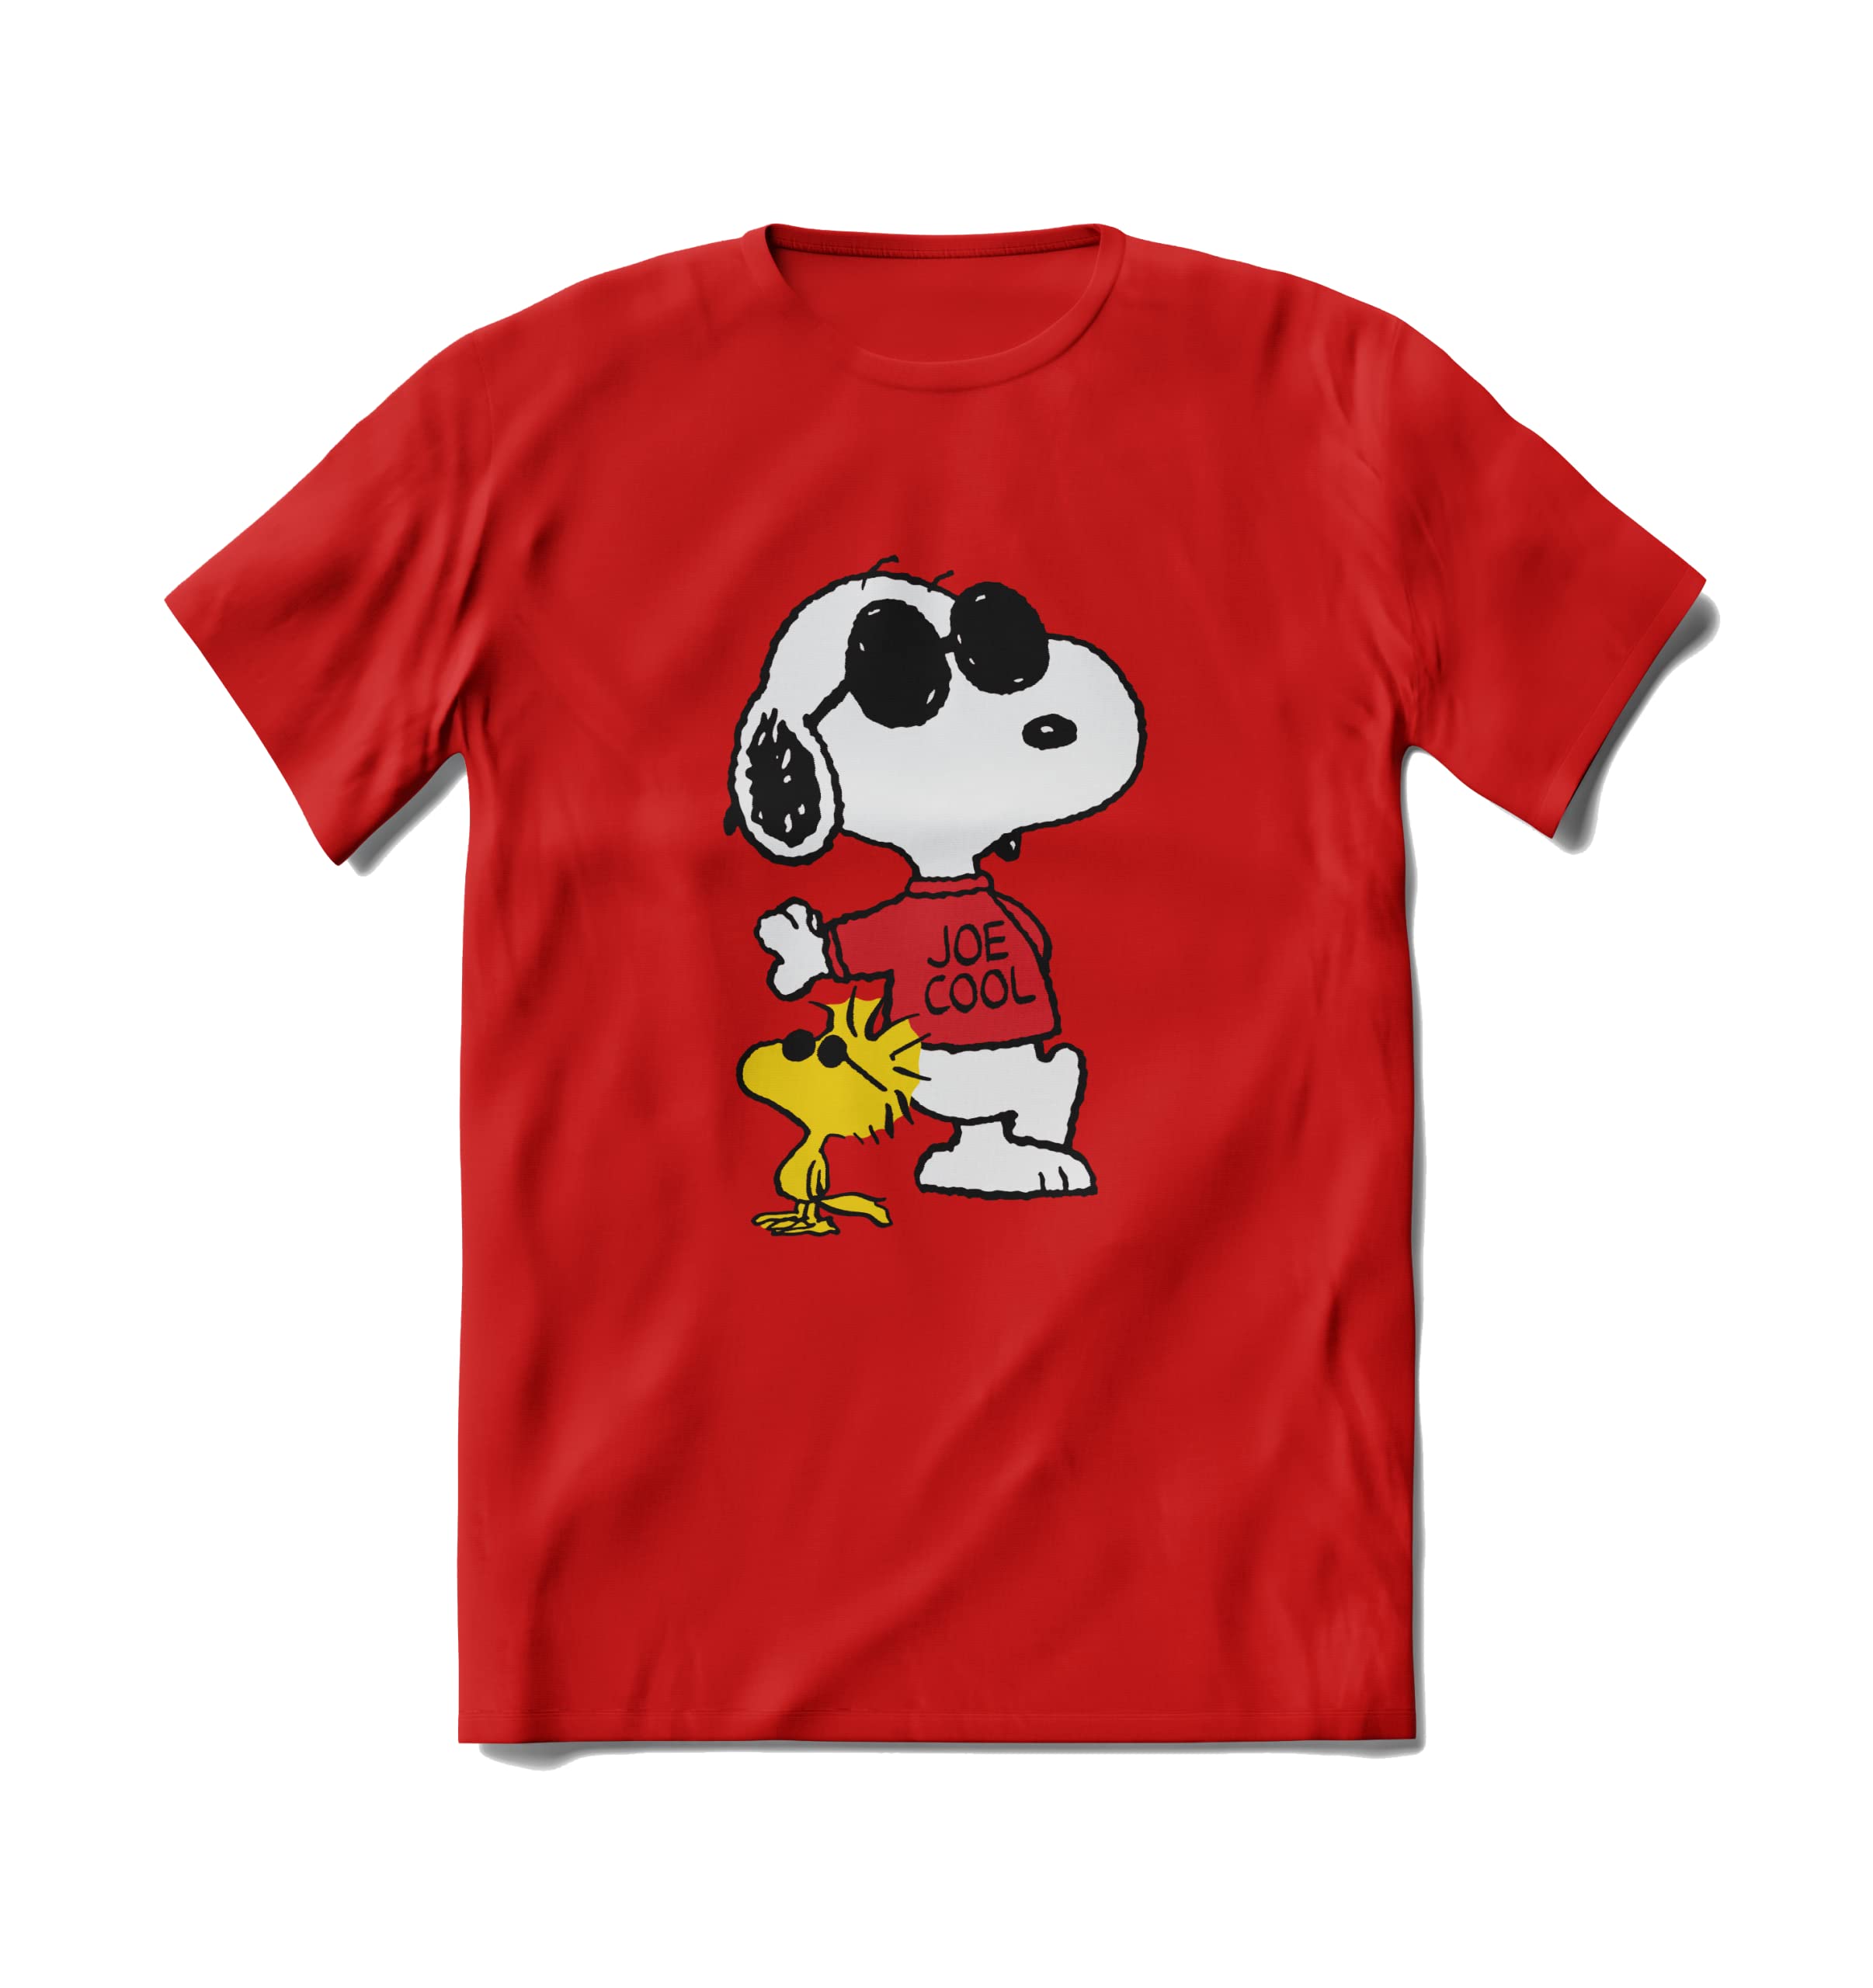 BRIEF INSANITY Peanuts Snoopy Joe Cool Unisex Short Sleeve T-Shirt